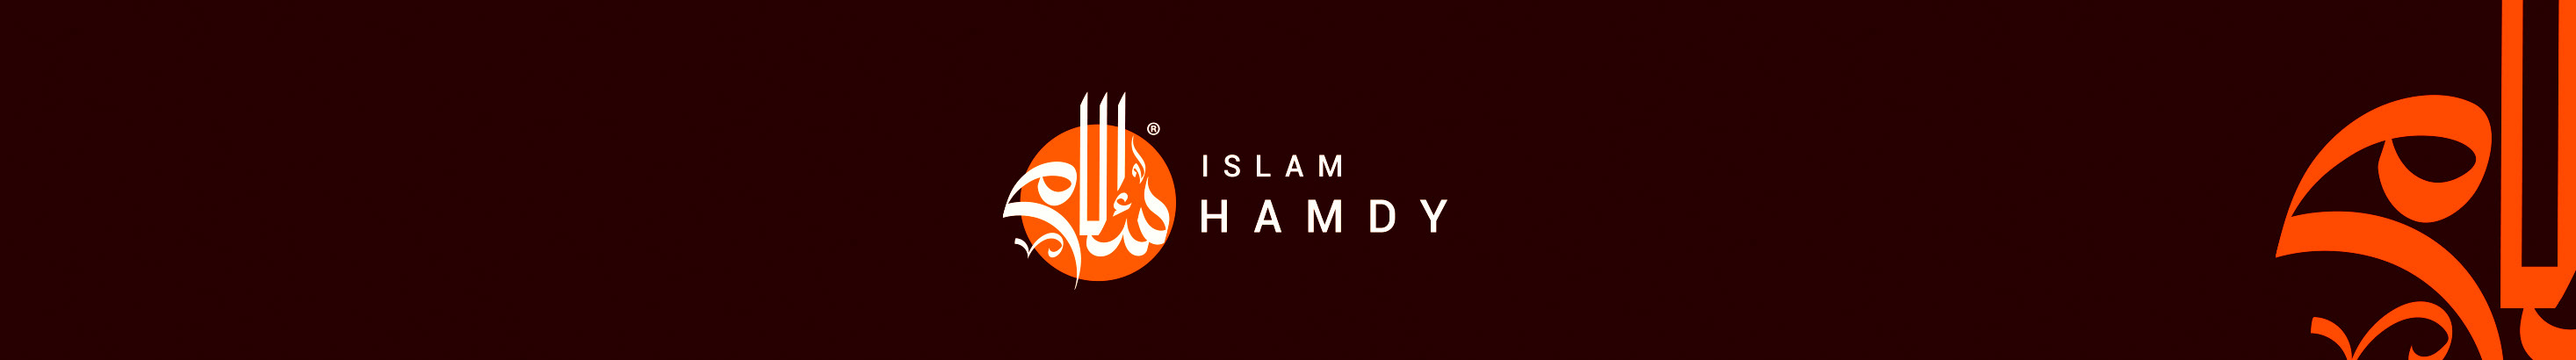 Islam Hamdy profil başlığı